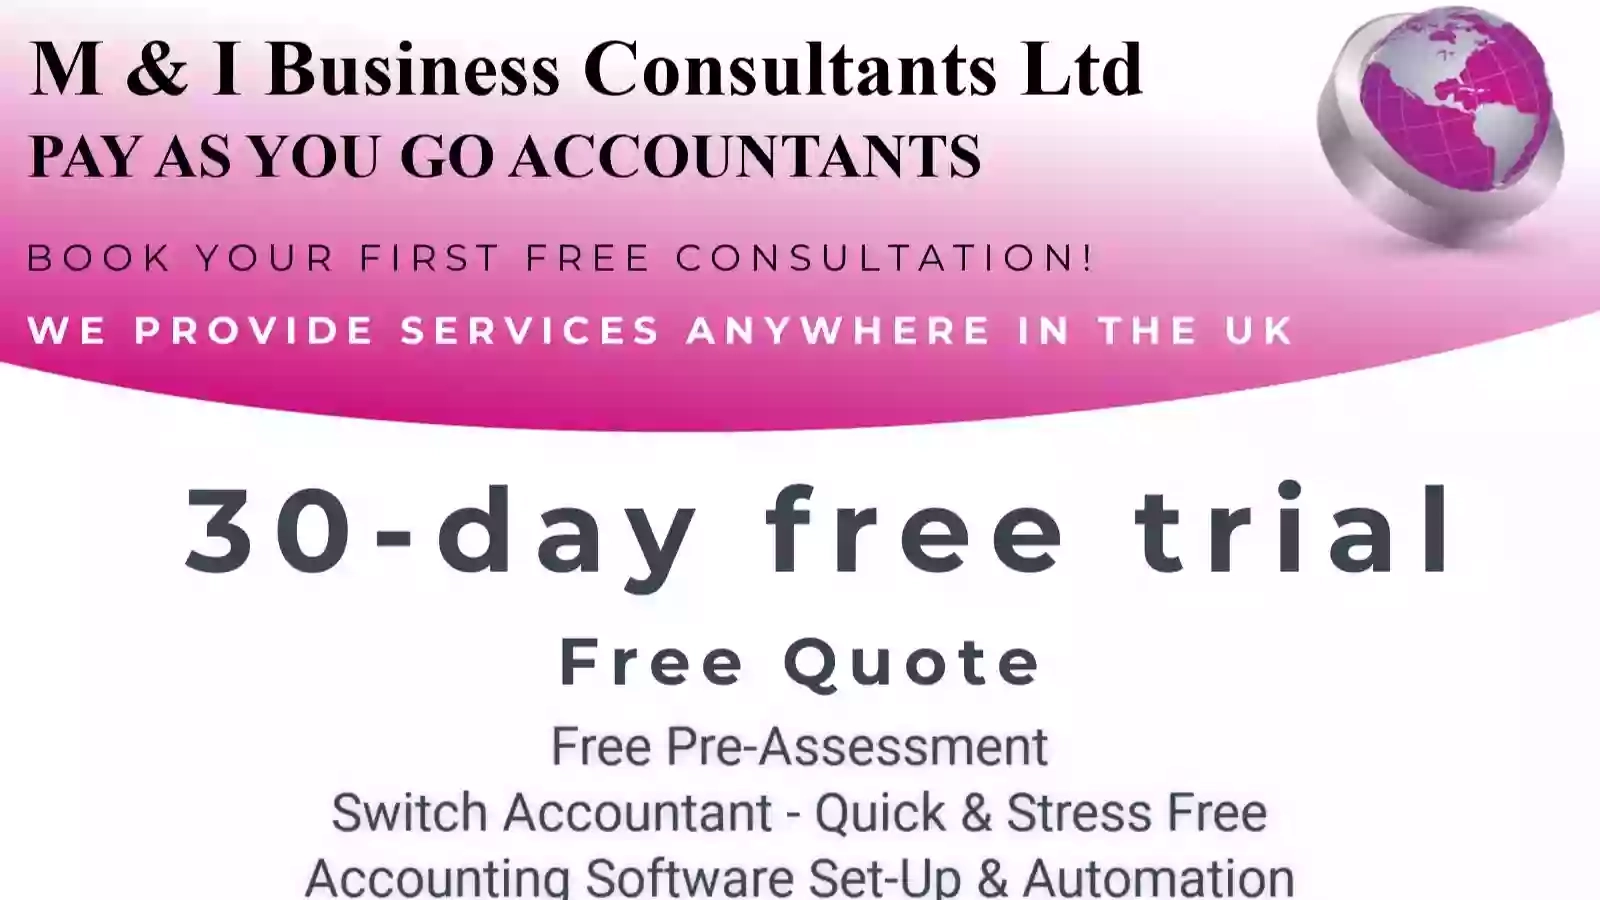 M & I Business Consultants Ltd